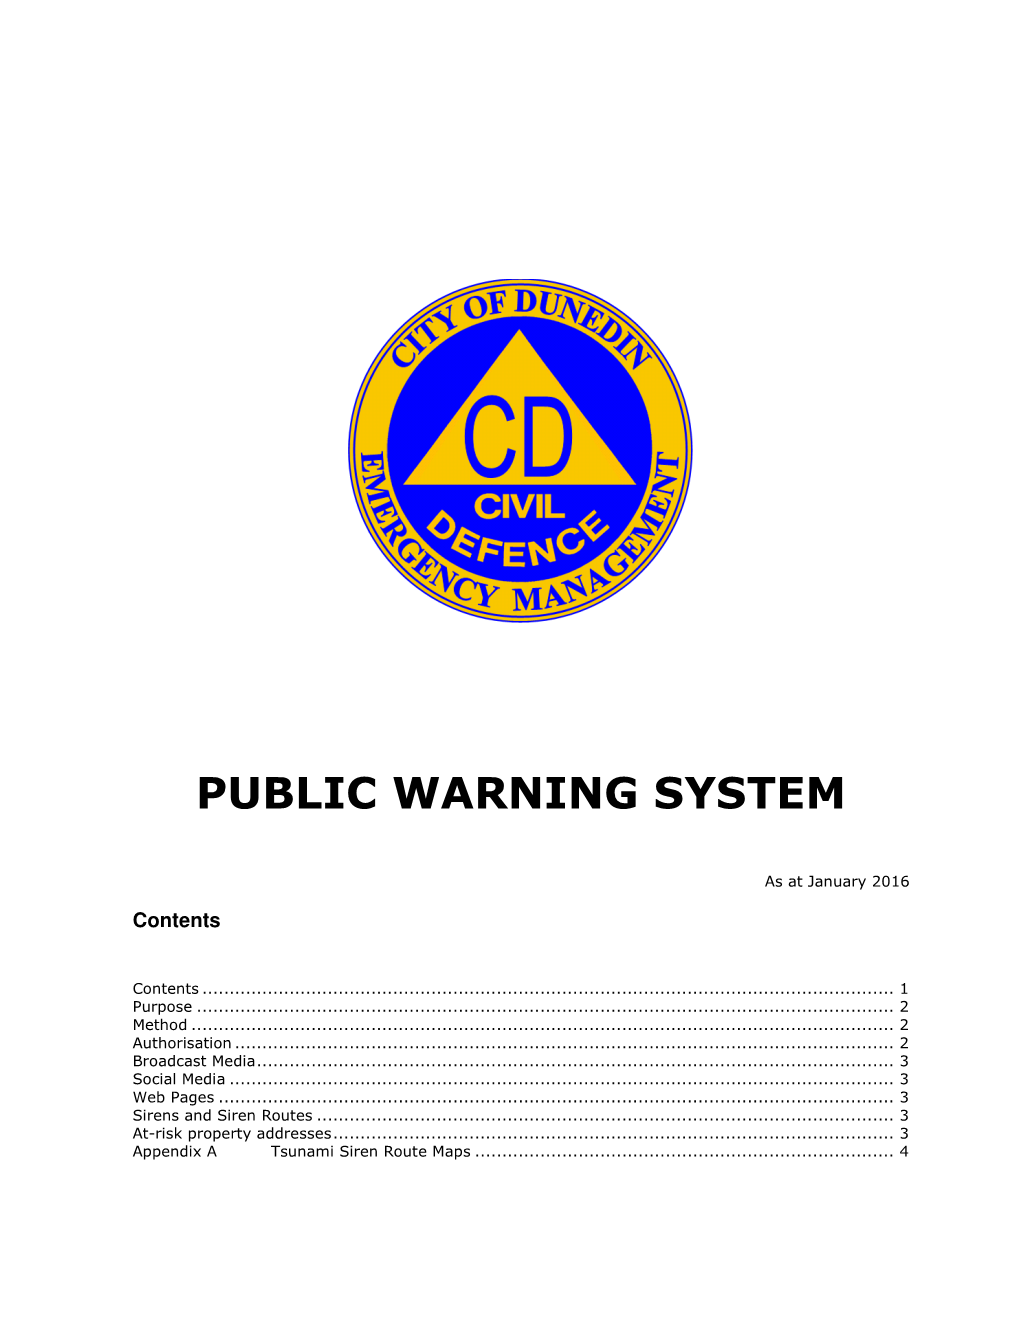 Public Warning System